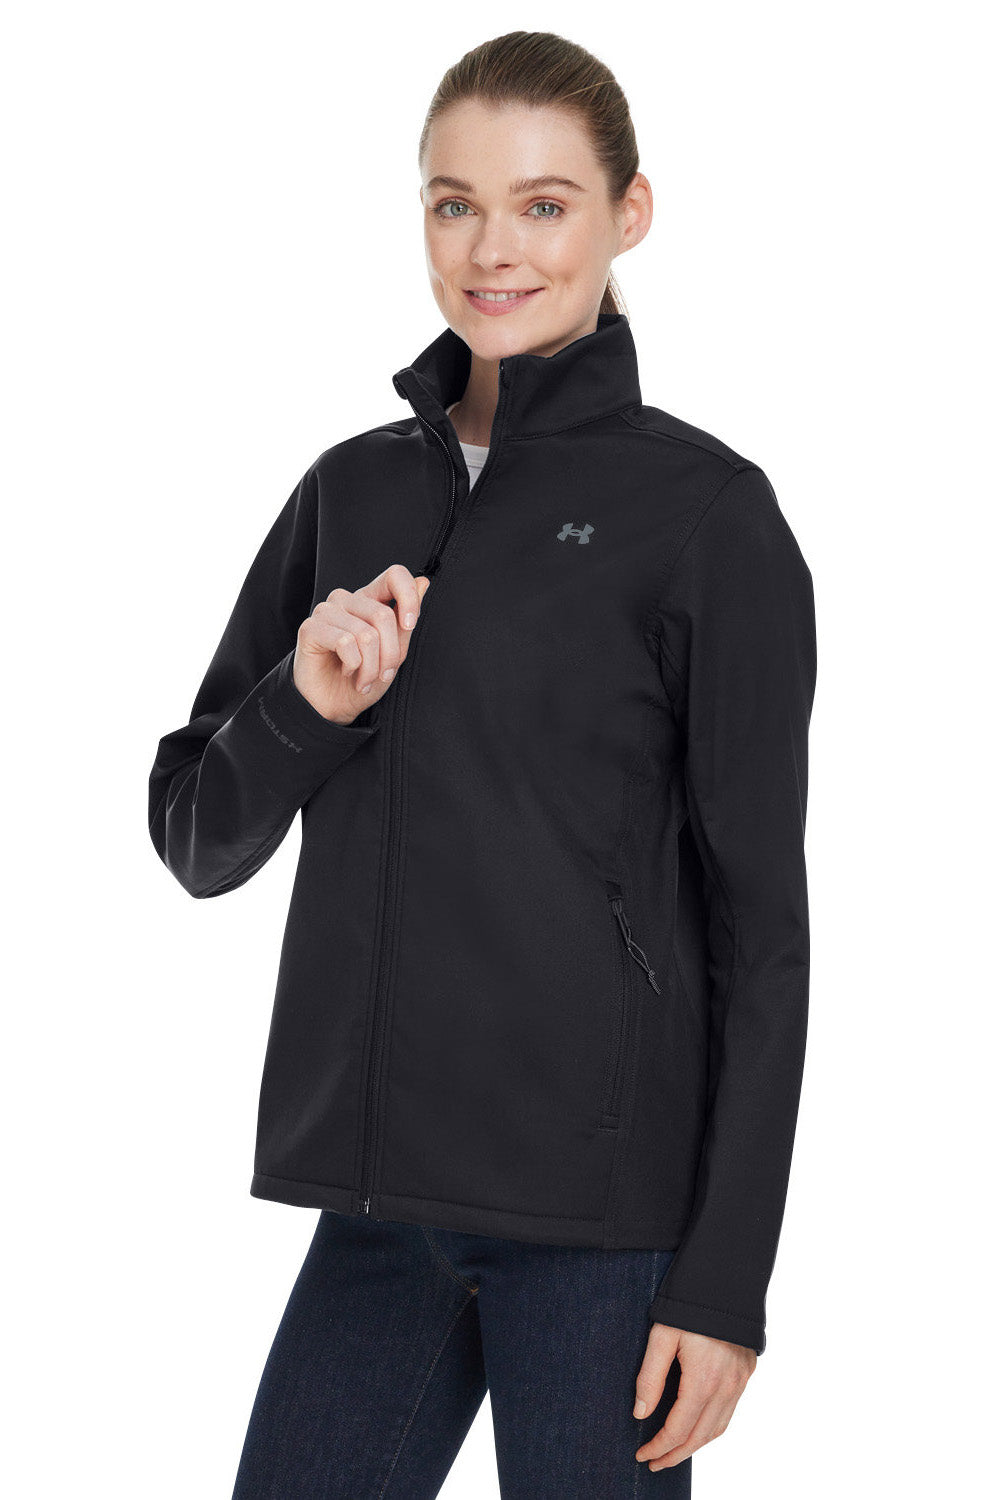 Under Armour 1371594 Womens ColdGear Infrared Shield 2.0 Windproof & Waterproof Full Zip Jacket Black Model 3Q